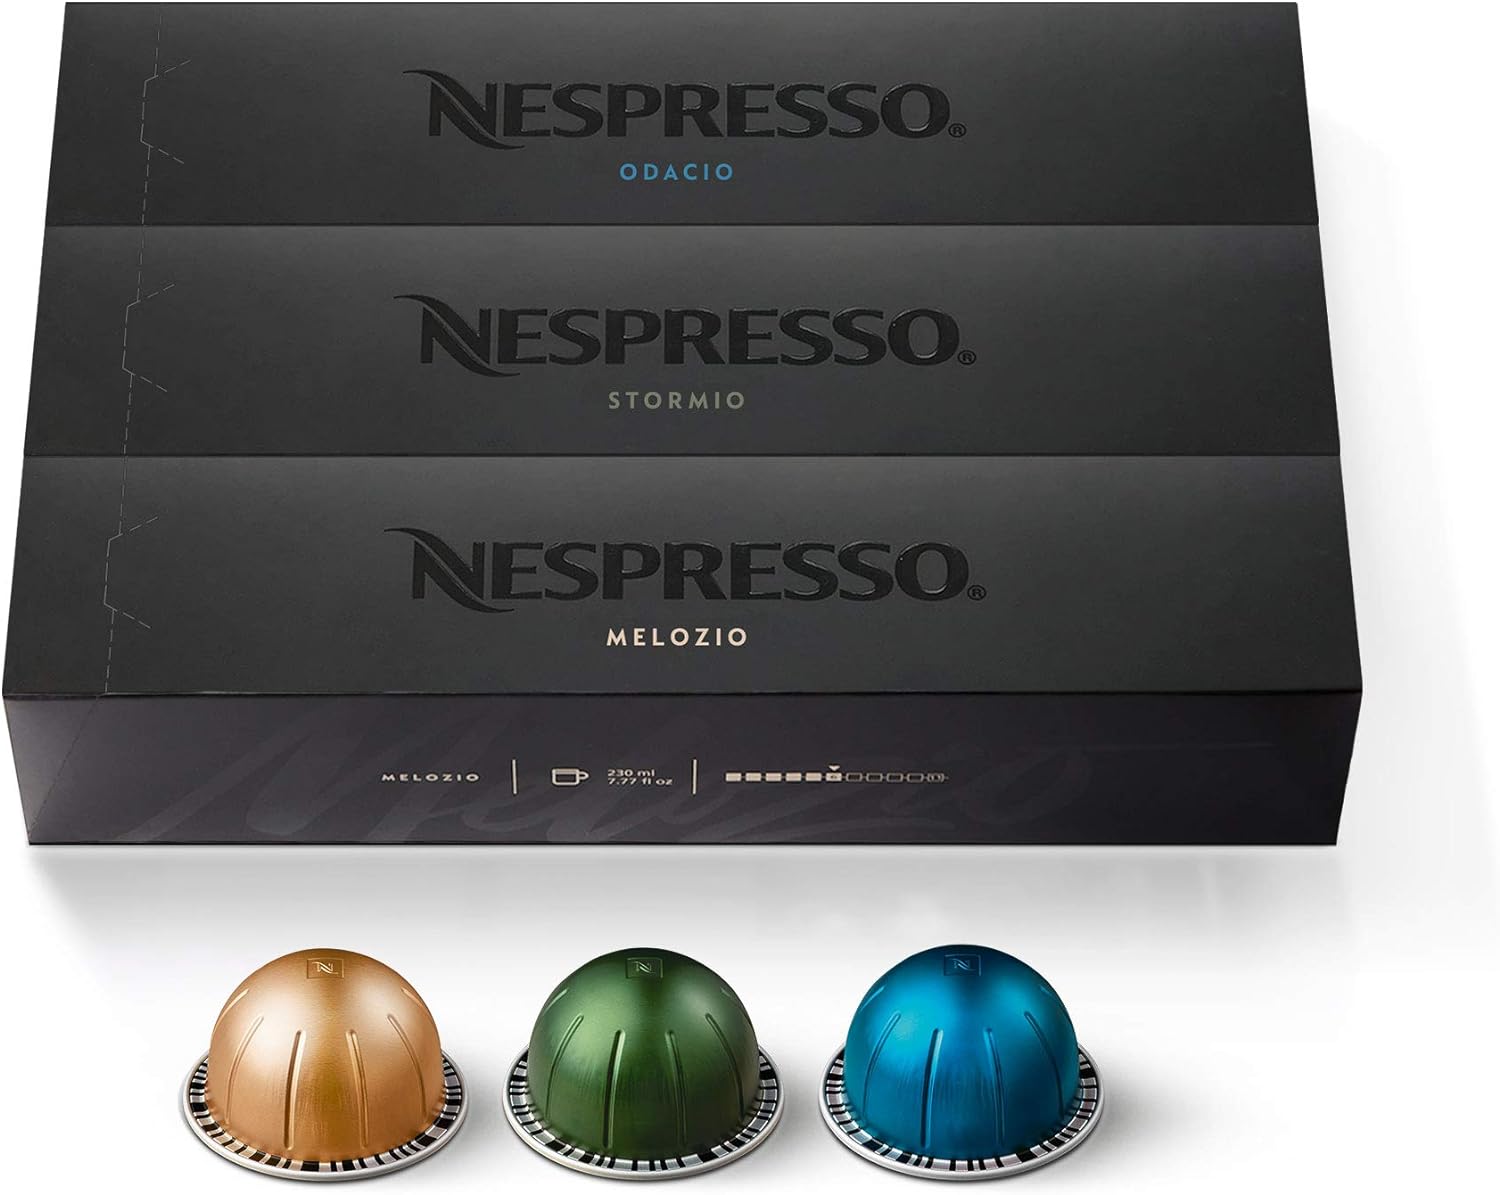 Nespresso Capsules VertuoLine: A Flavorful Coffee Experience